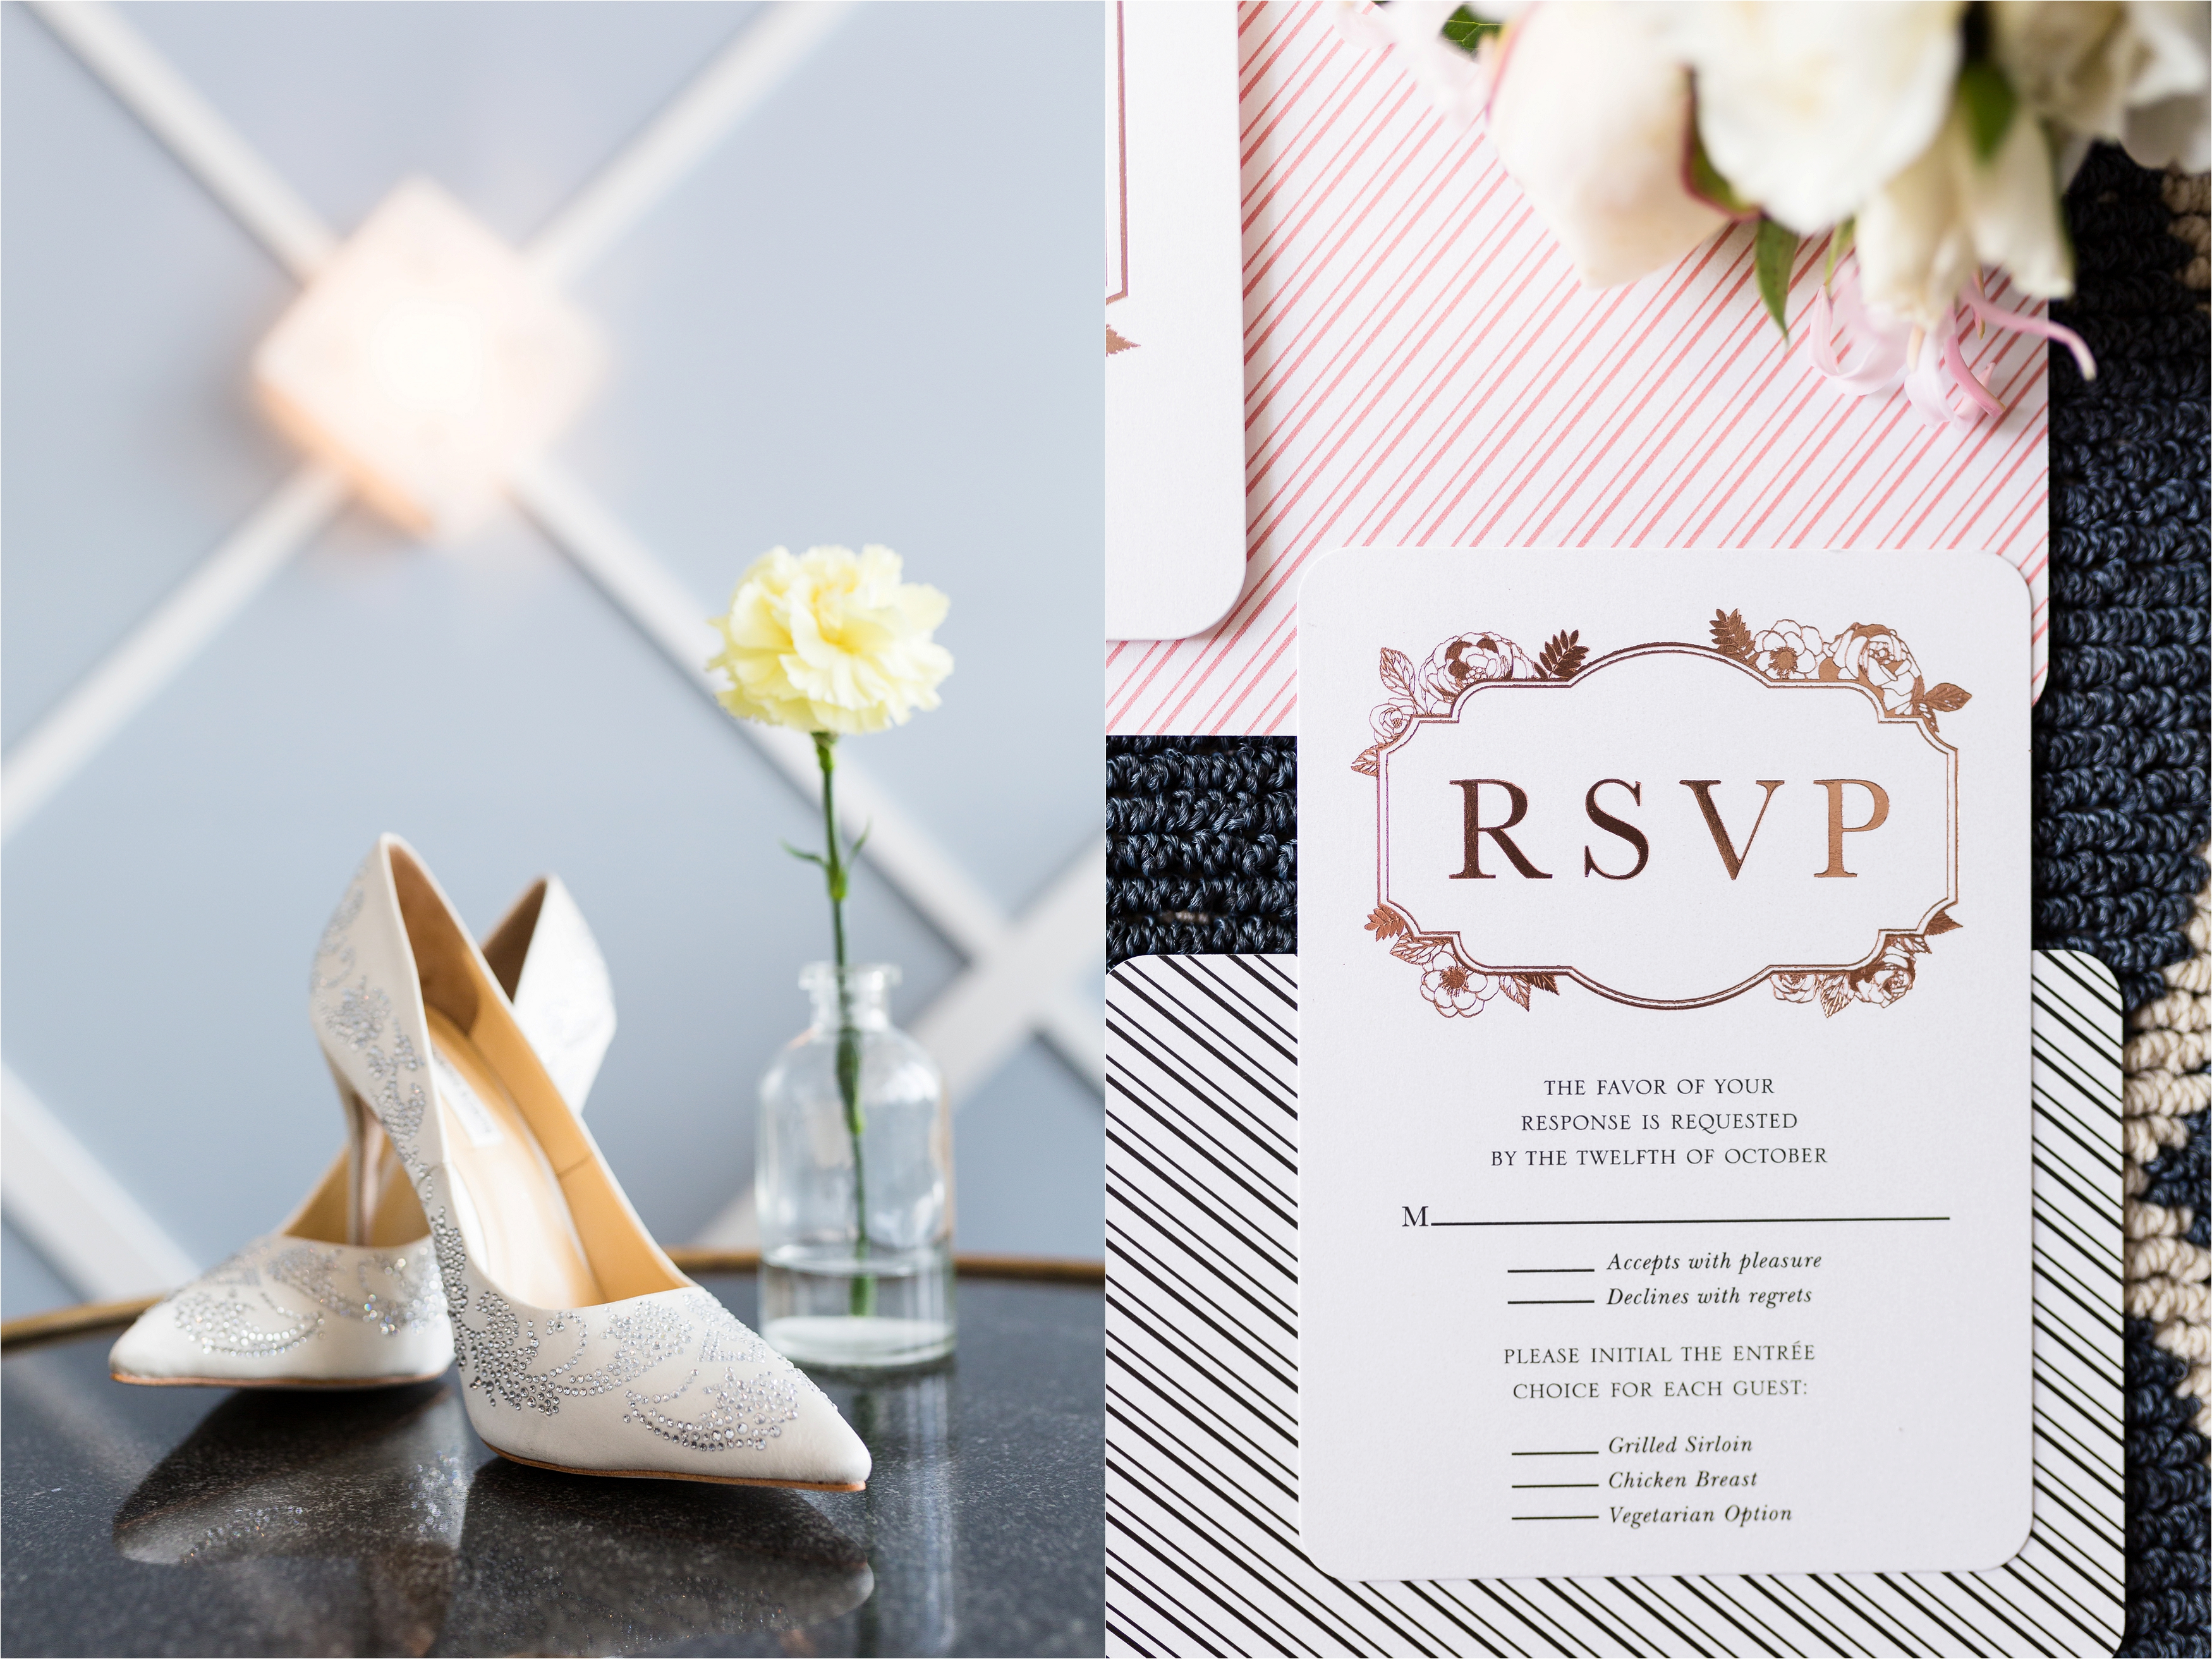 Bridal shoes and wedding invitation